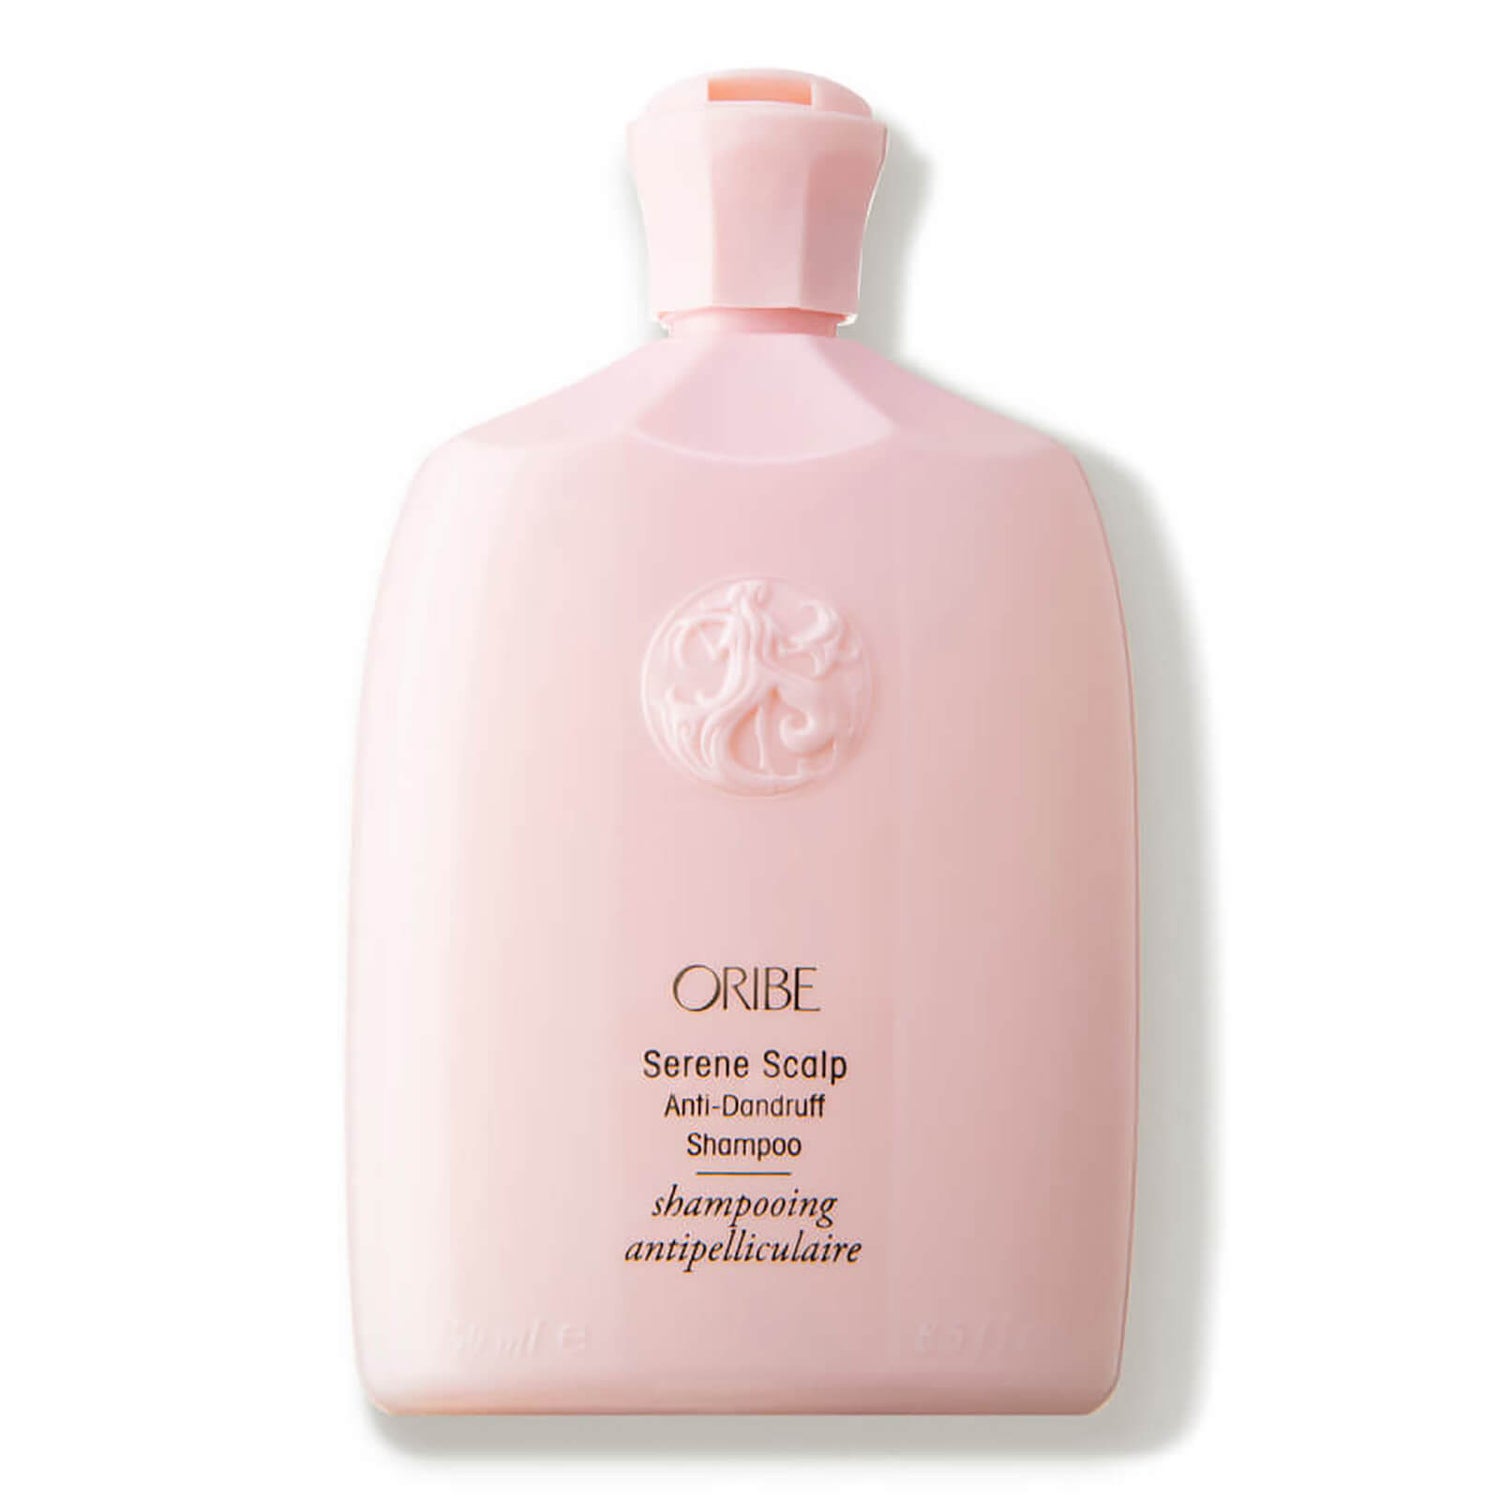 Oribe Serene Scalp Anti-Dandruff Shampoo (8.5 fl. oz.)